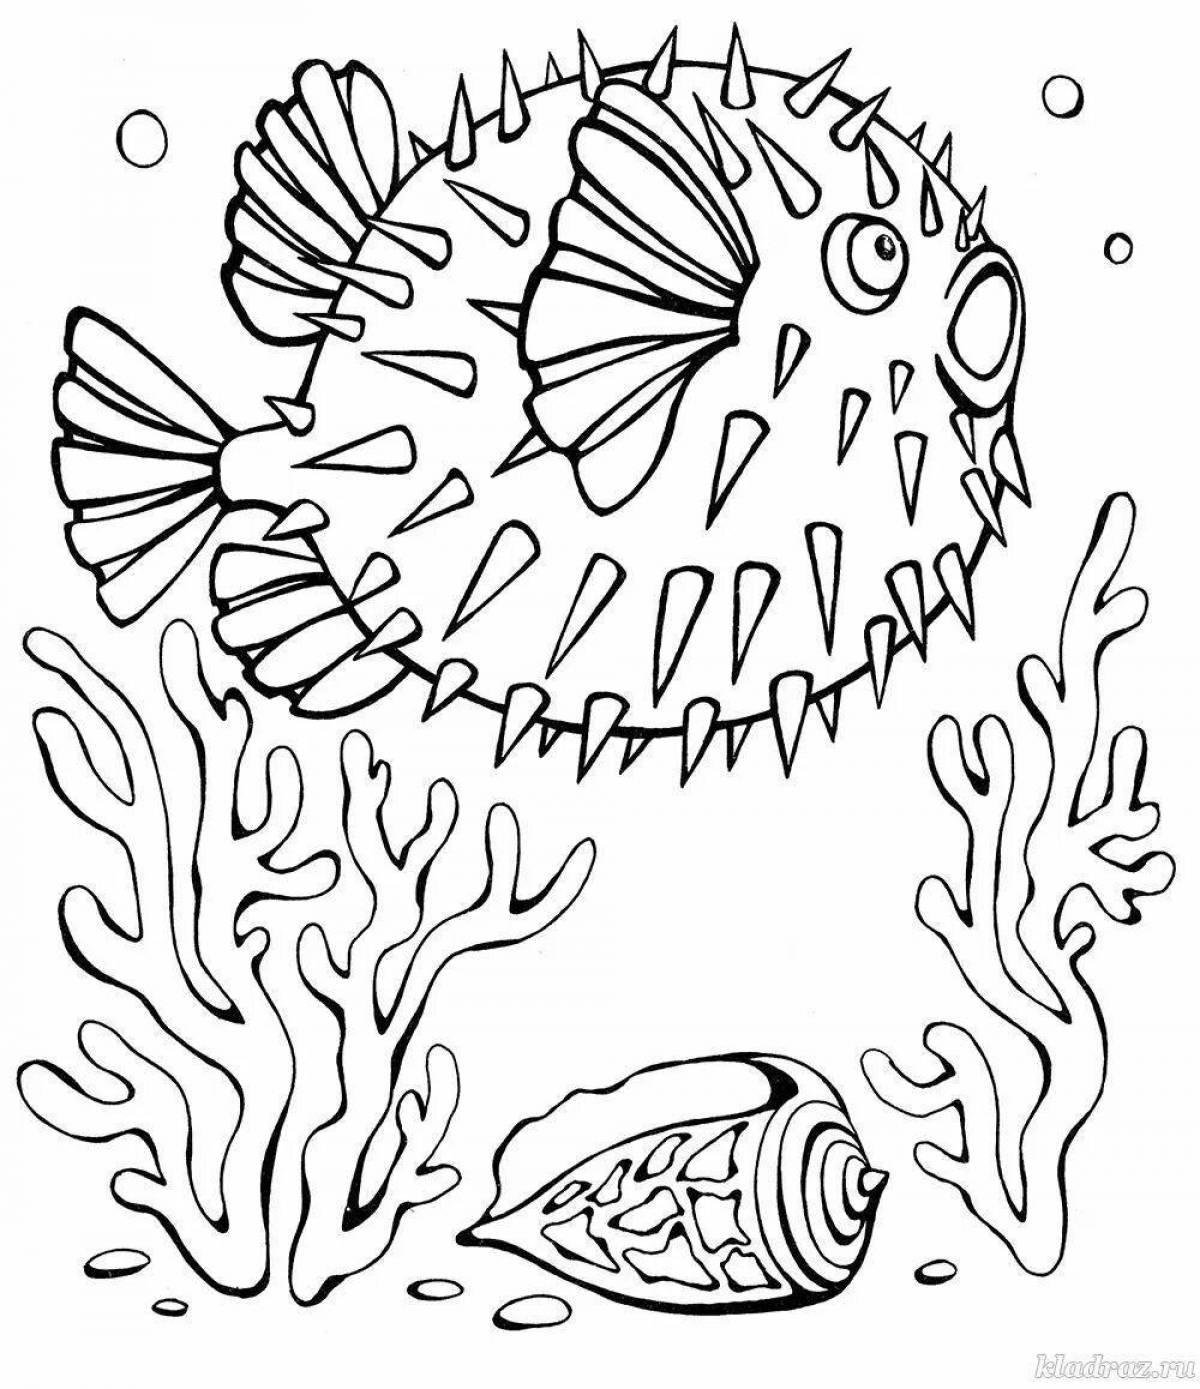 Coloring book shining ball fish